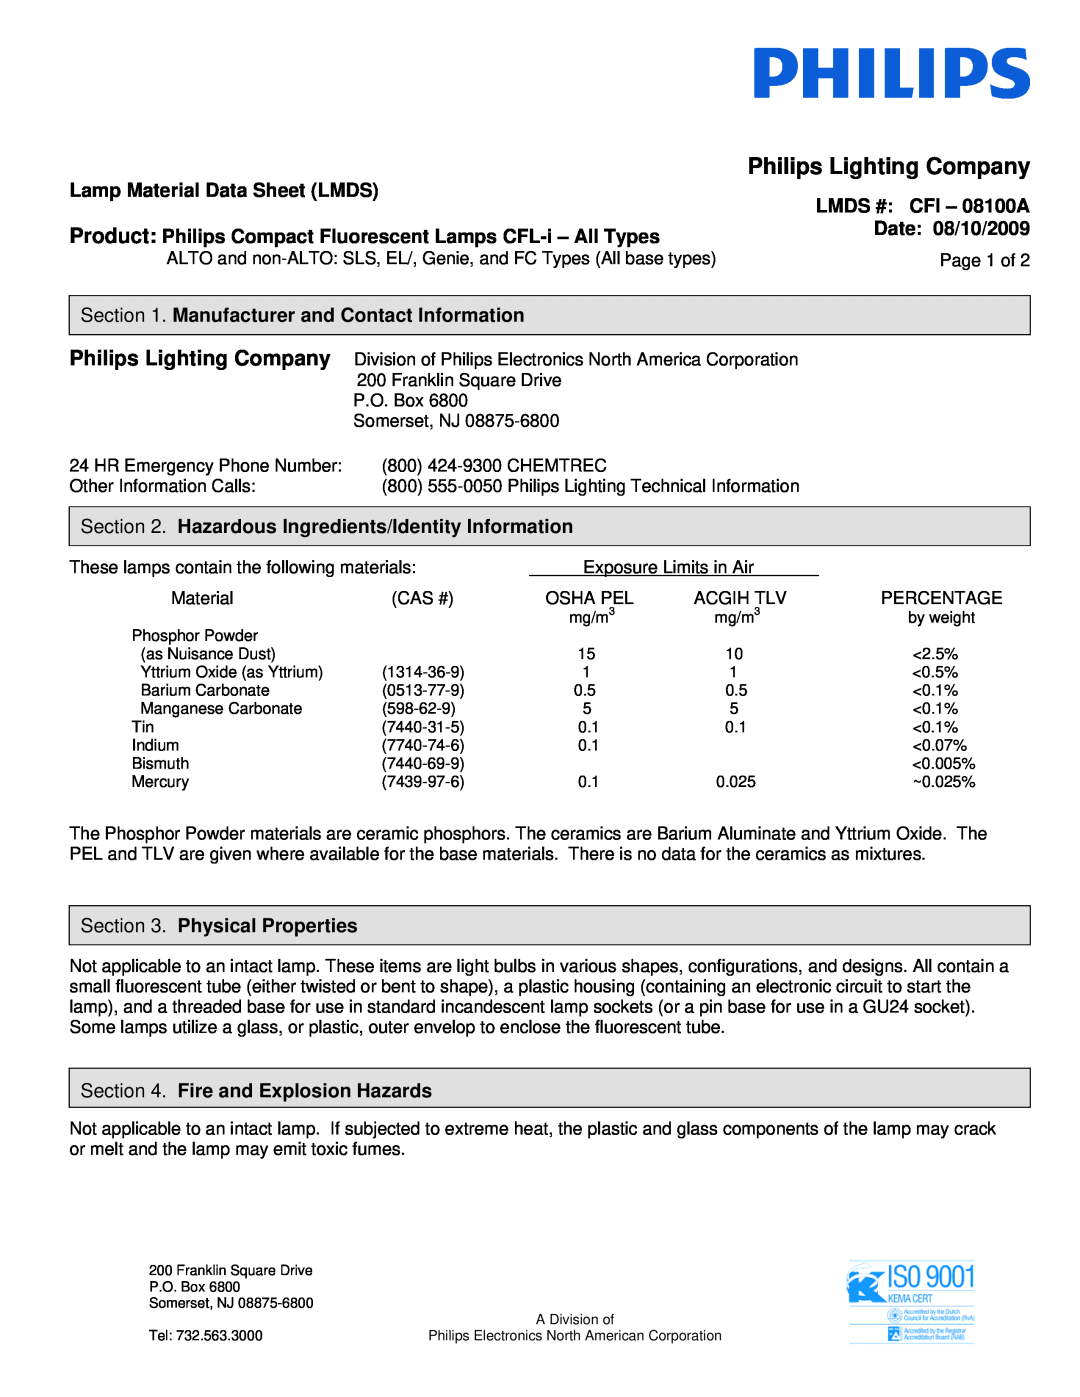 Philips CFI-08100A manual Lamp Material Data Sheet LMDS, LMDS # CFI - 08100A, Date 08/10/2009, Physical Properties 